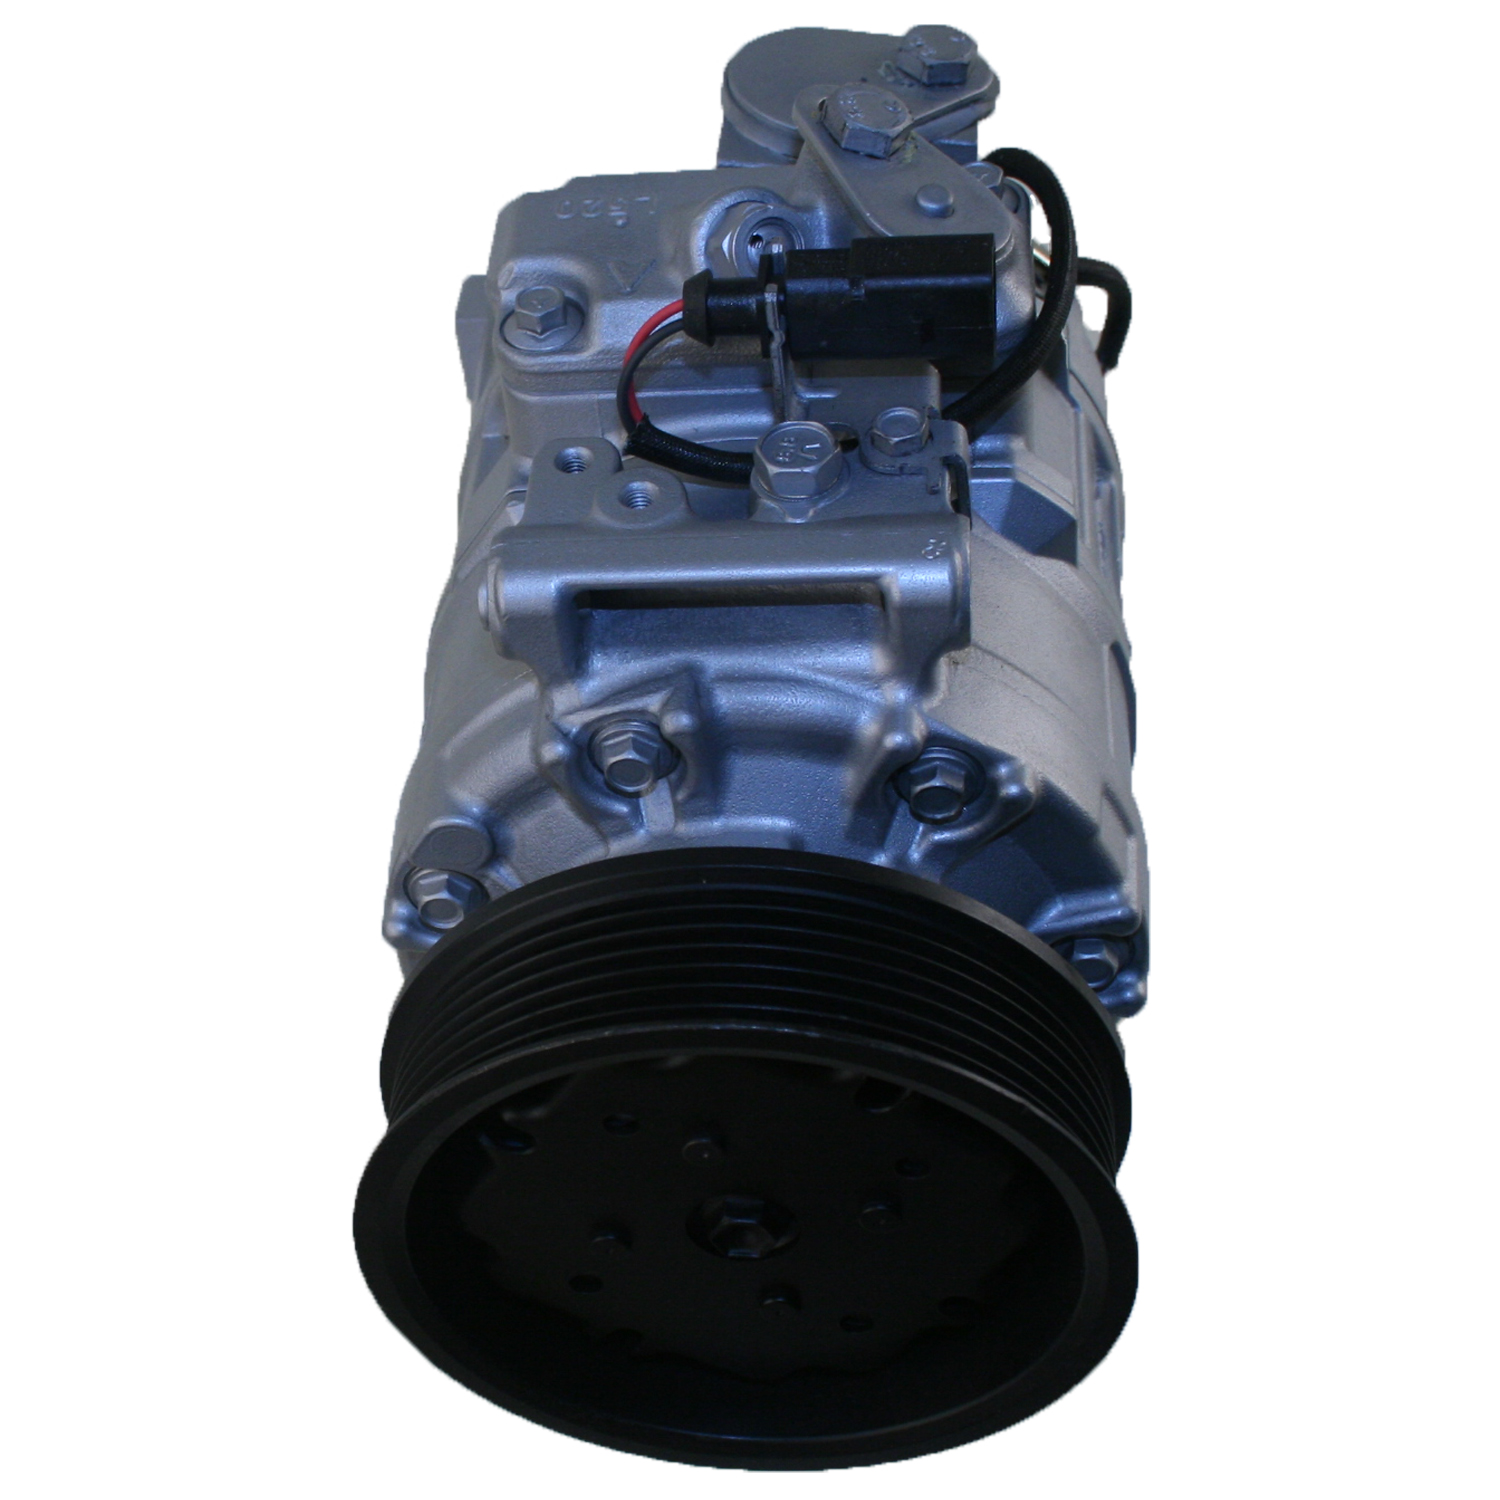 TCW Compressor 31760.7T1 Remanufactured Product Image field_60b6a13a6e67c